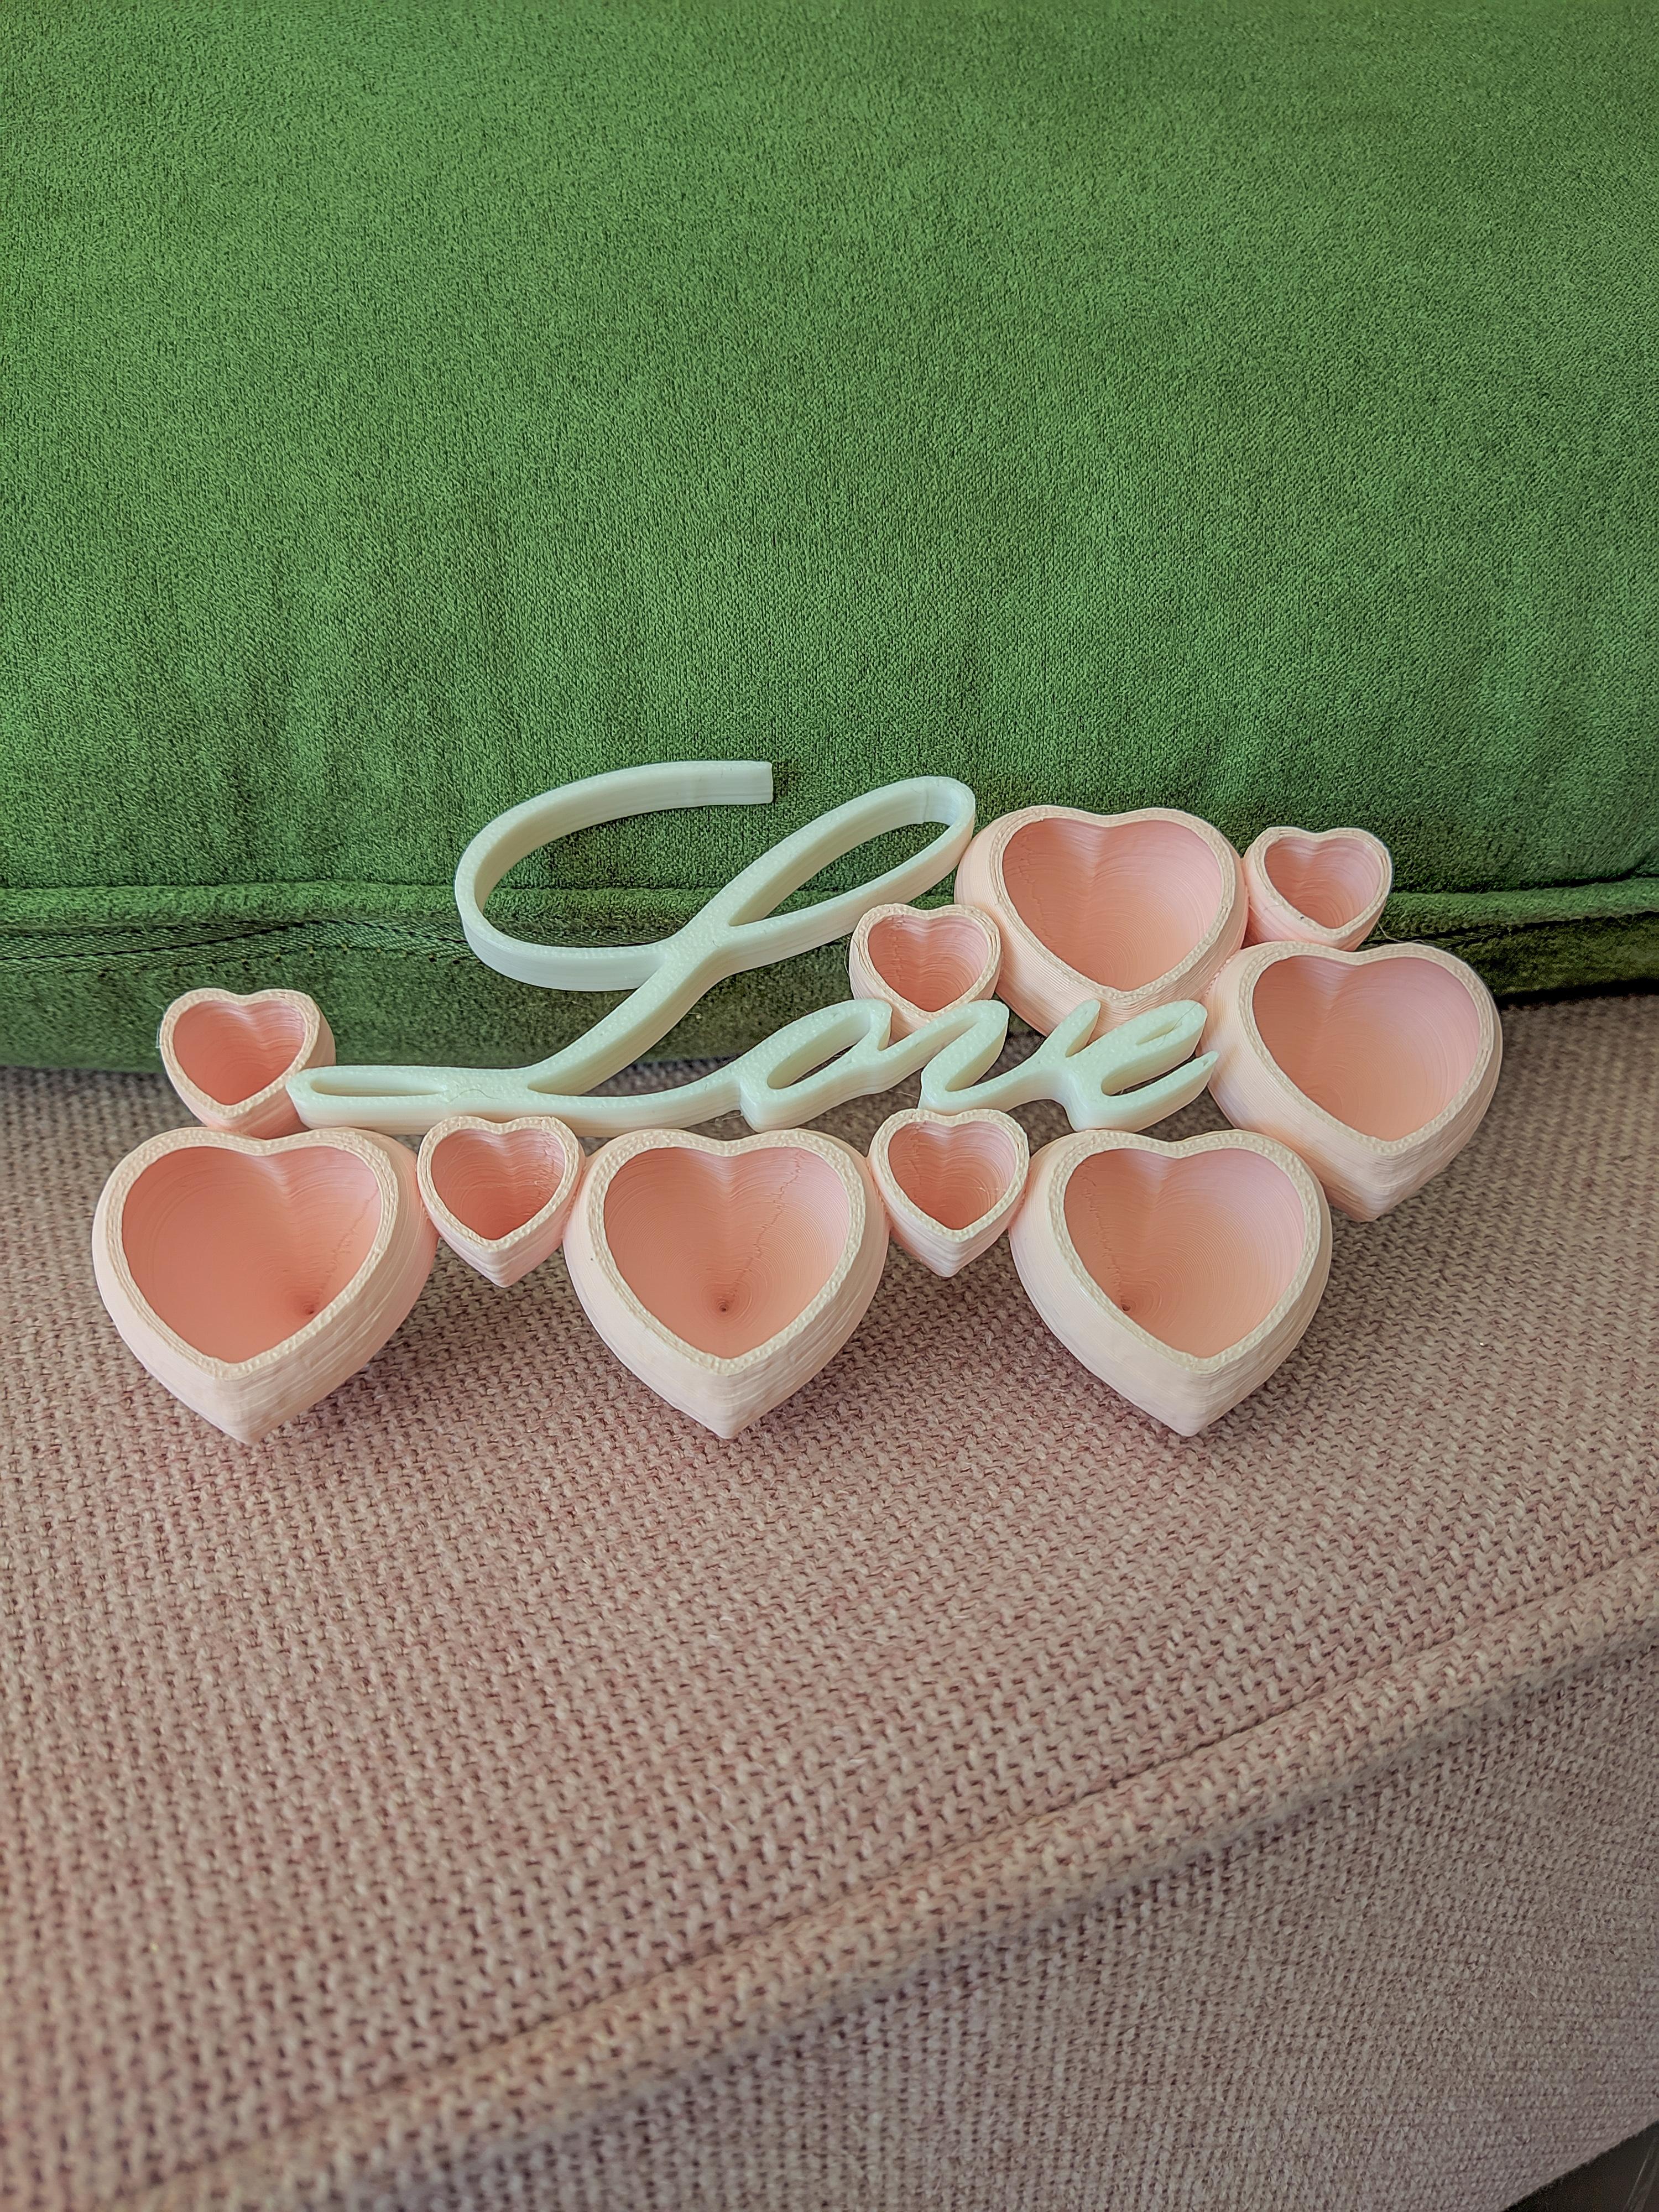 Love Hearts Ornament - Pla+ GST3d - White
Pla HD Winkle Candy floss (light pink) - 3d model